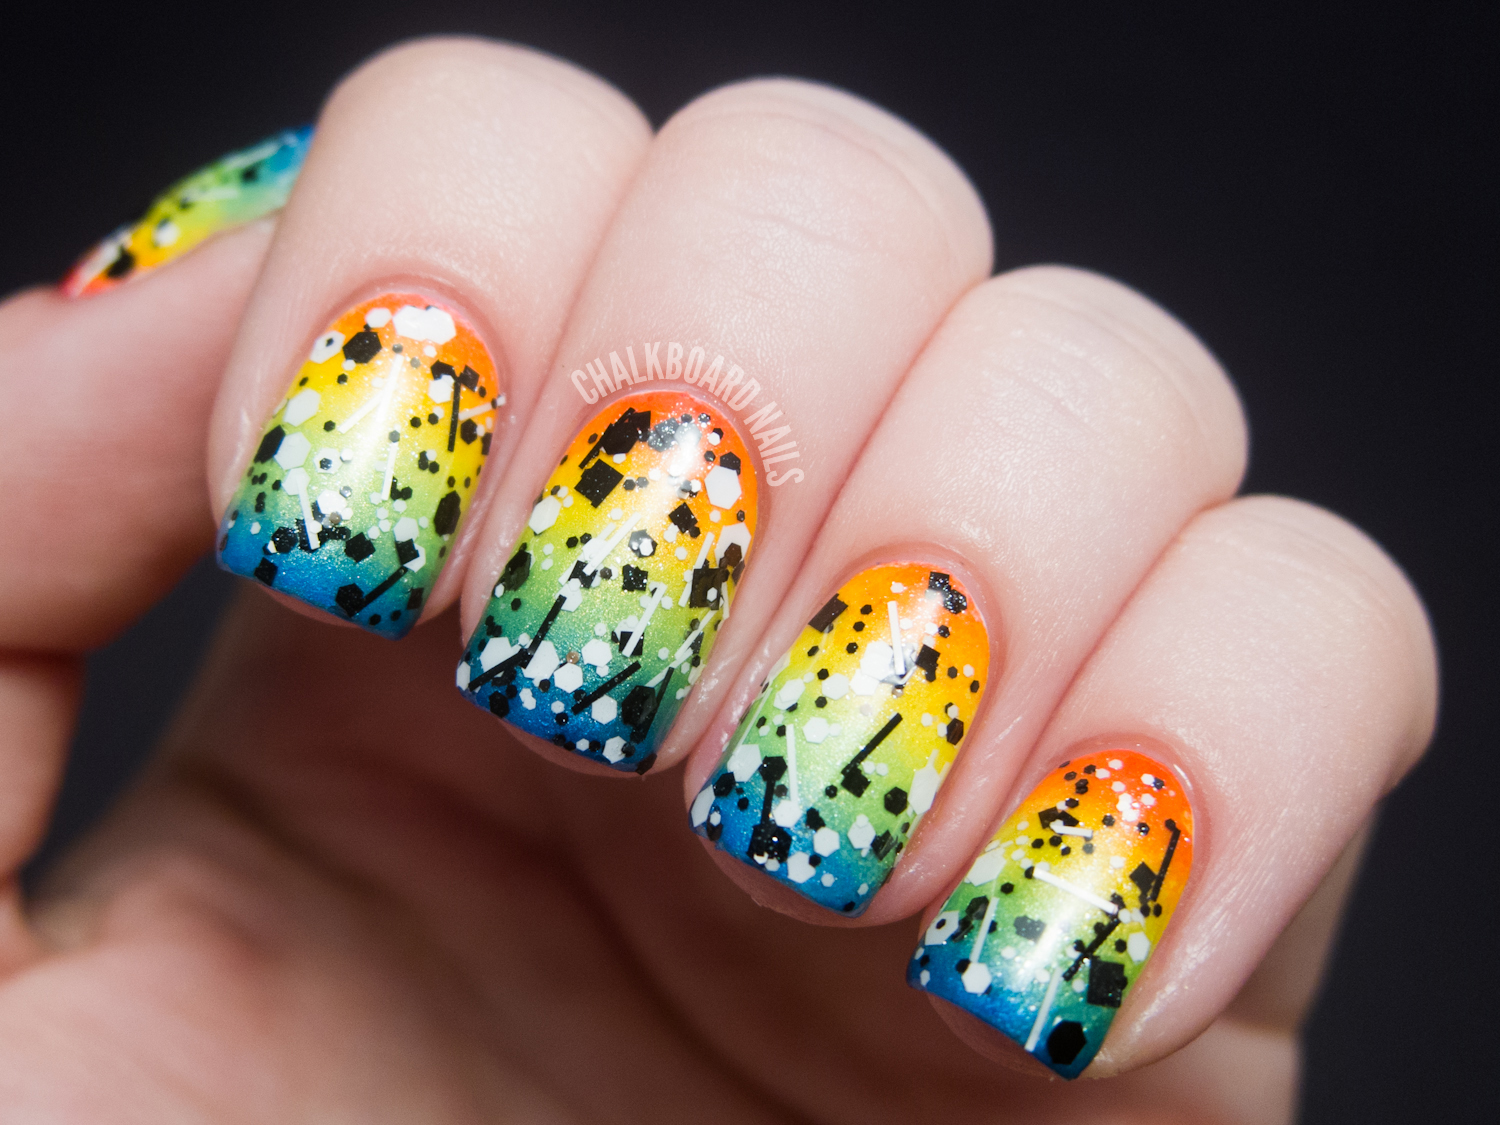 3. Gradient Rainbow Nail Art with Sponge - wide 5